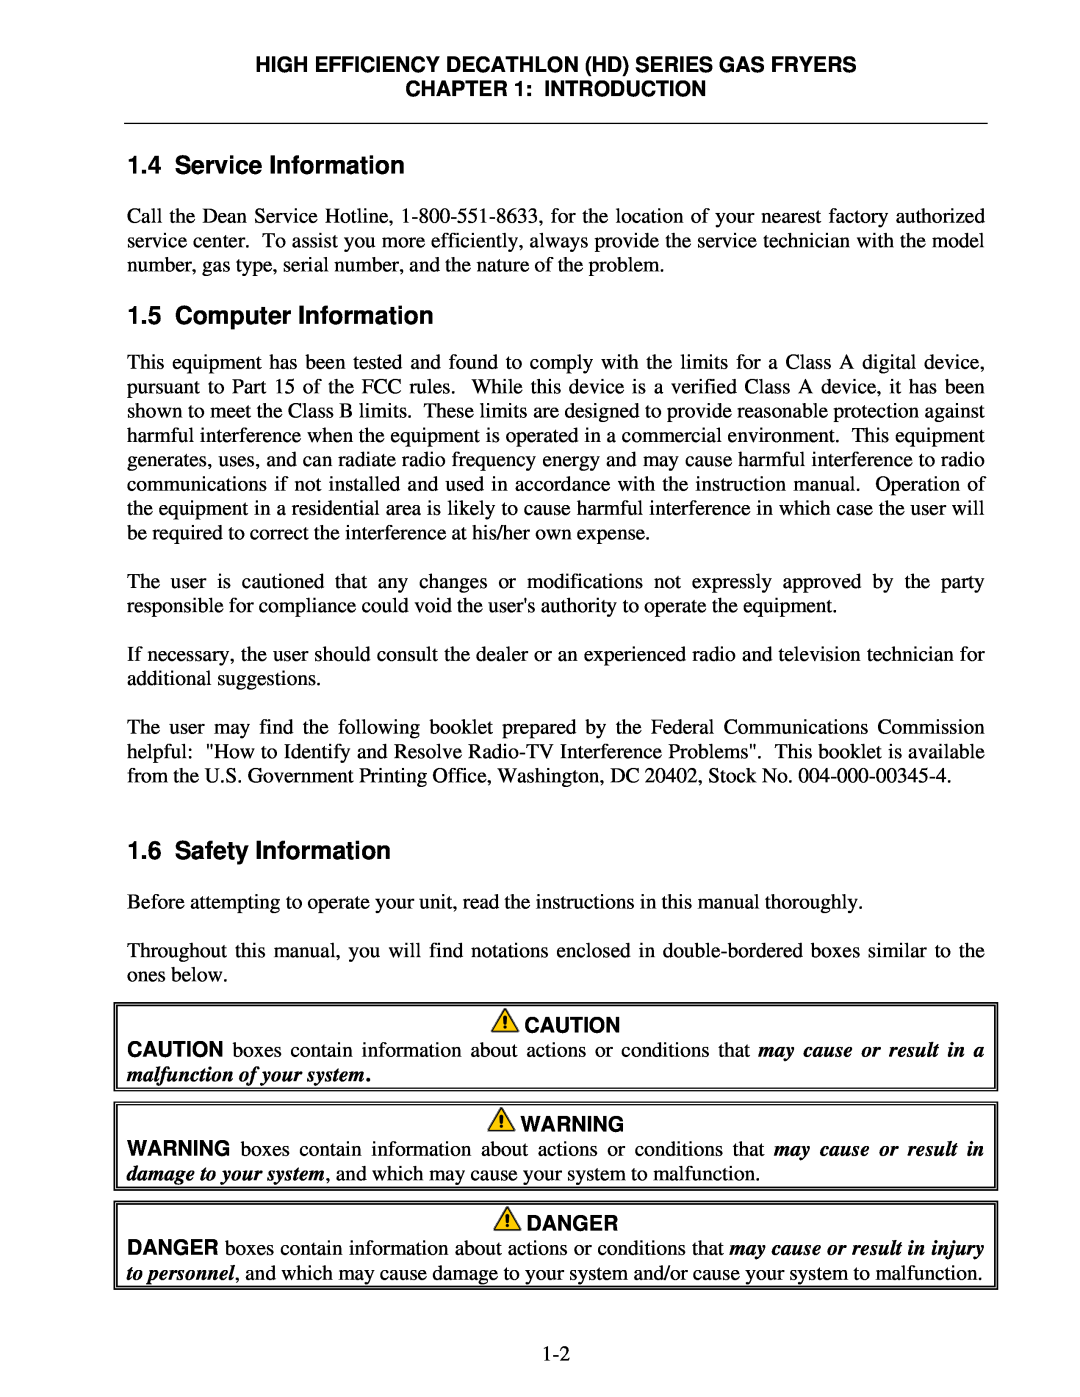 Frymaster FPHD65 operation manual Service Information, Computer Information, Safety Information, Introduction, Danger 